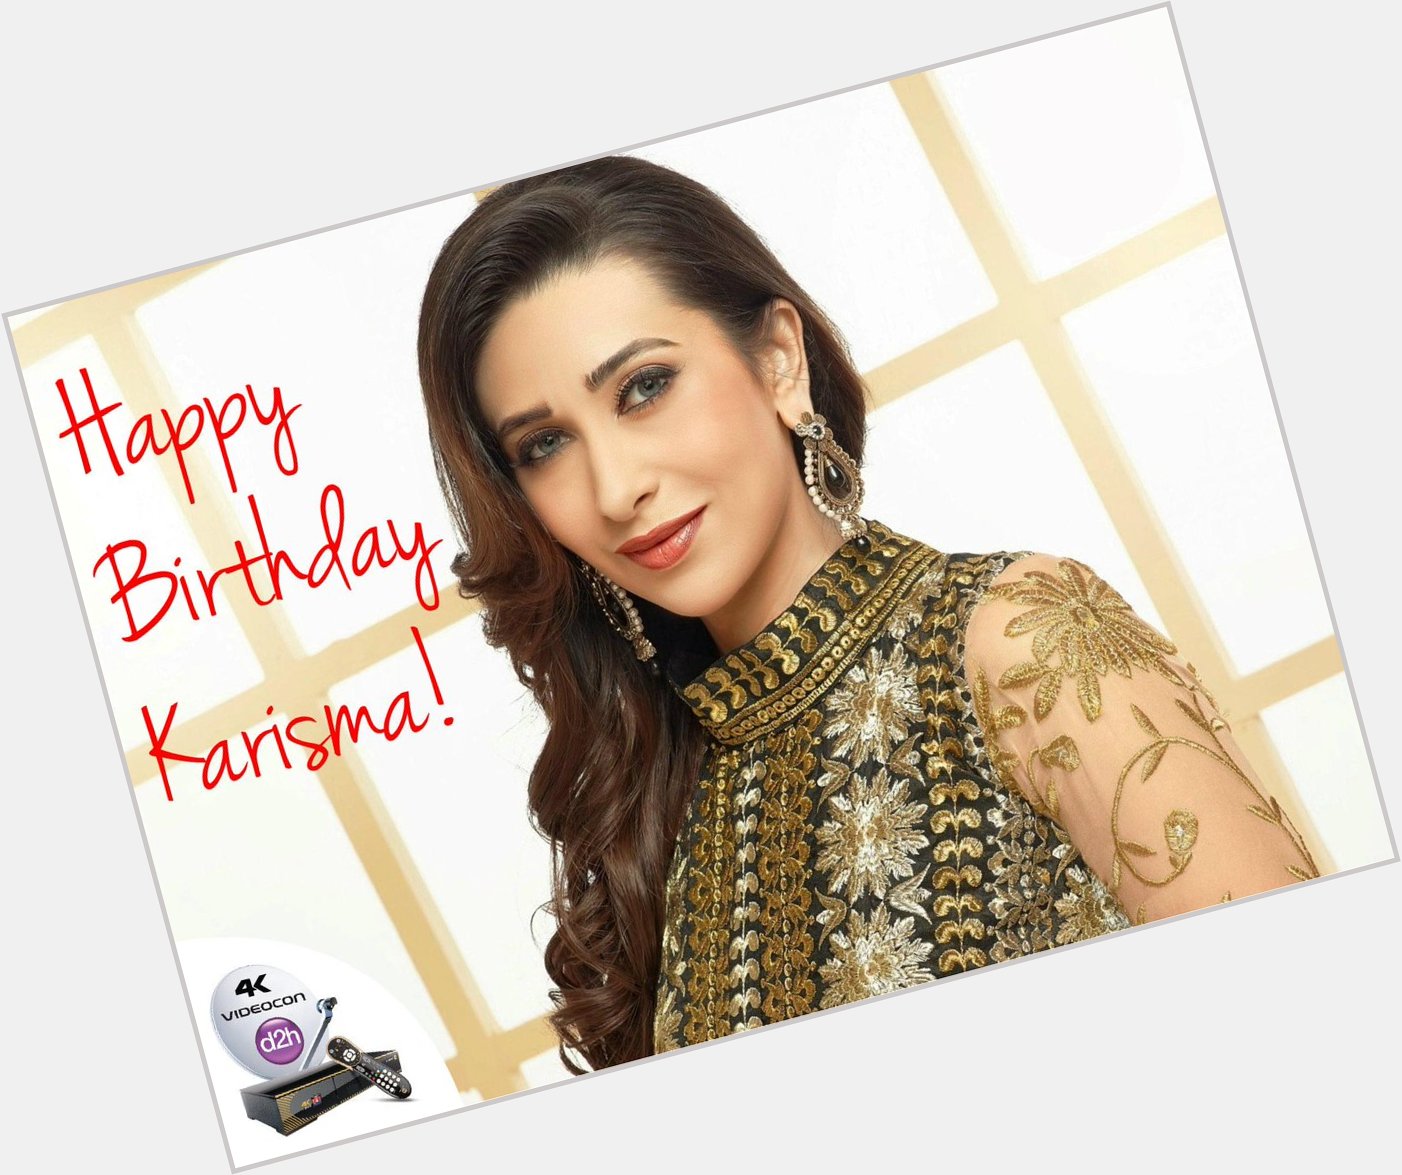 Happy Birthday Karisma Kapoor!
Join us in wishing the beautiful actress an amazing year ahead. 